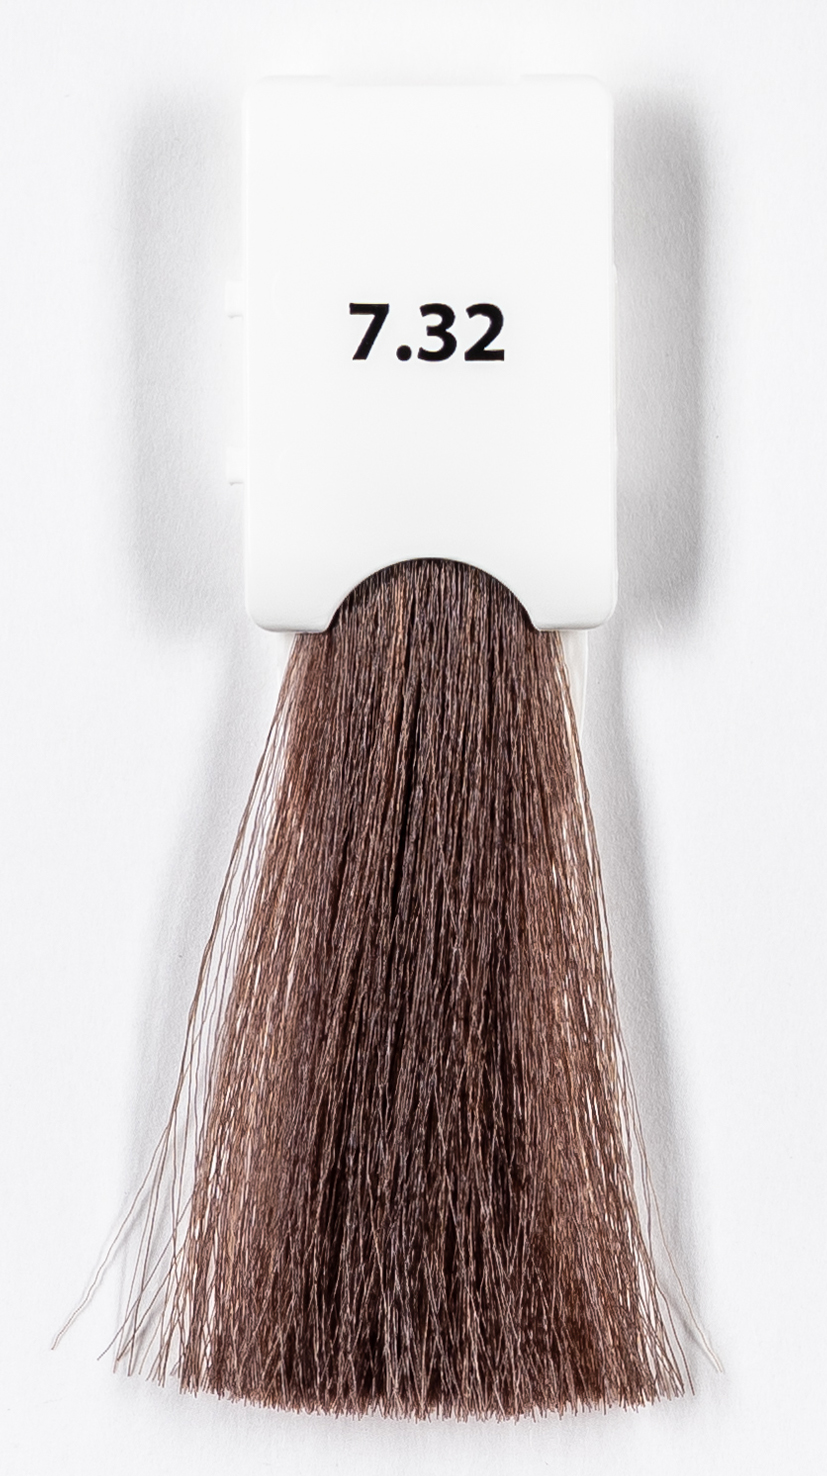 фото Kaaral Крем-краска с гидролизатами шелка "Baco COLOR COLLECTION" B7.32 средний золотисто-фиолетовый блонд, 100 мл, B7.32 